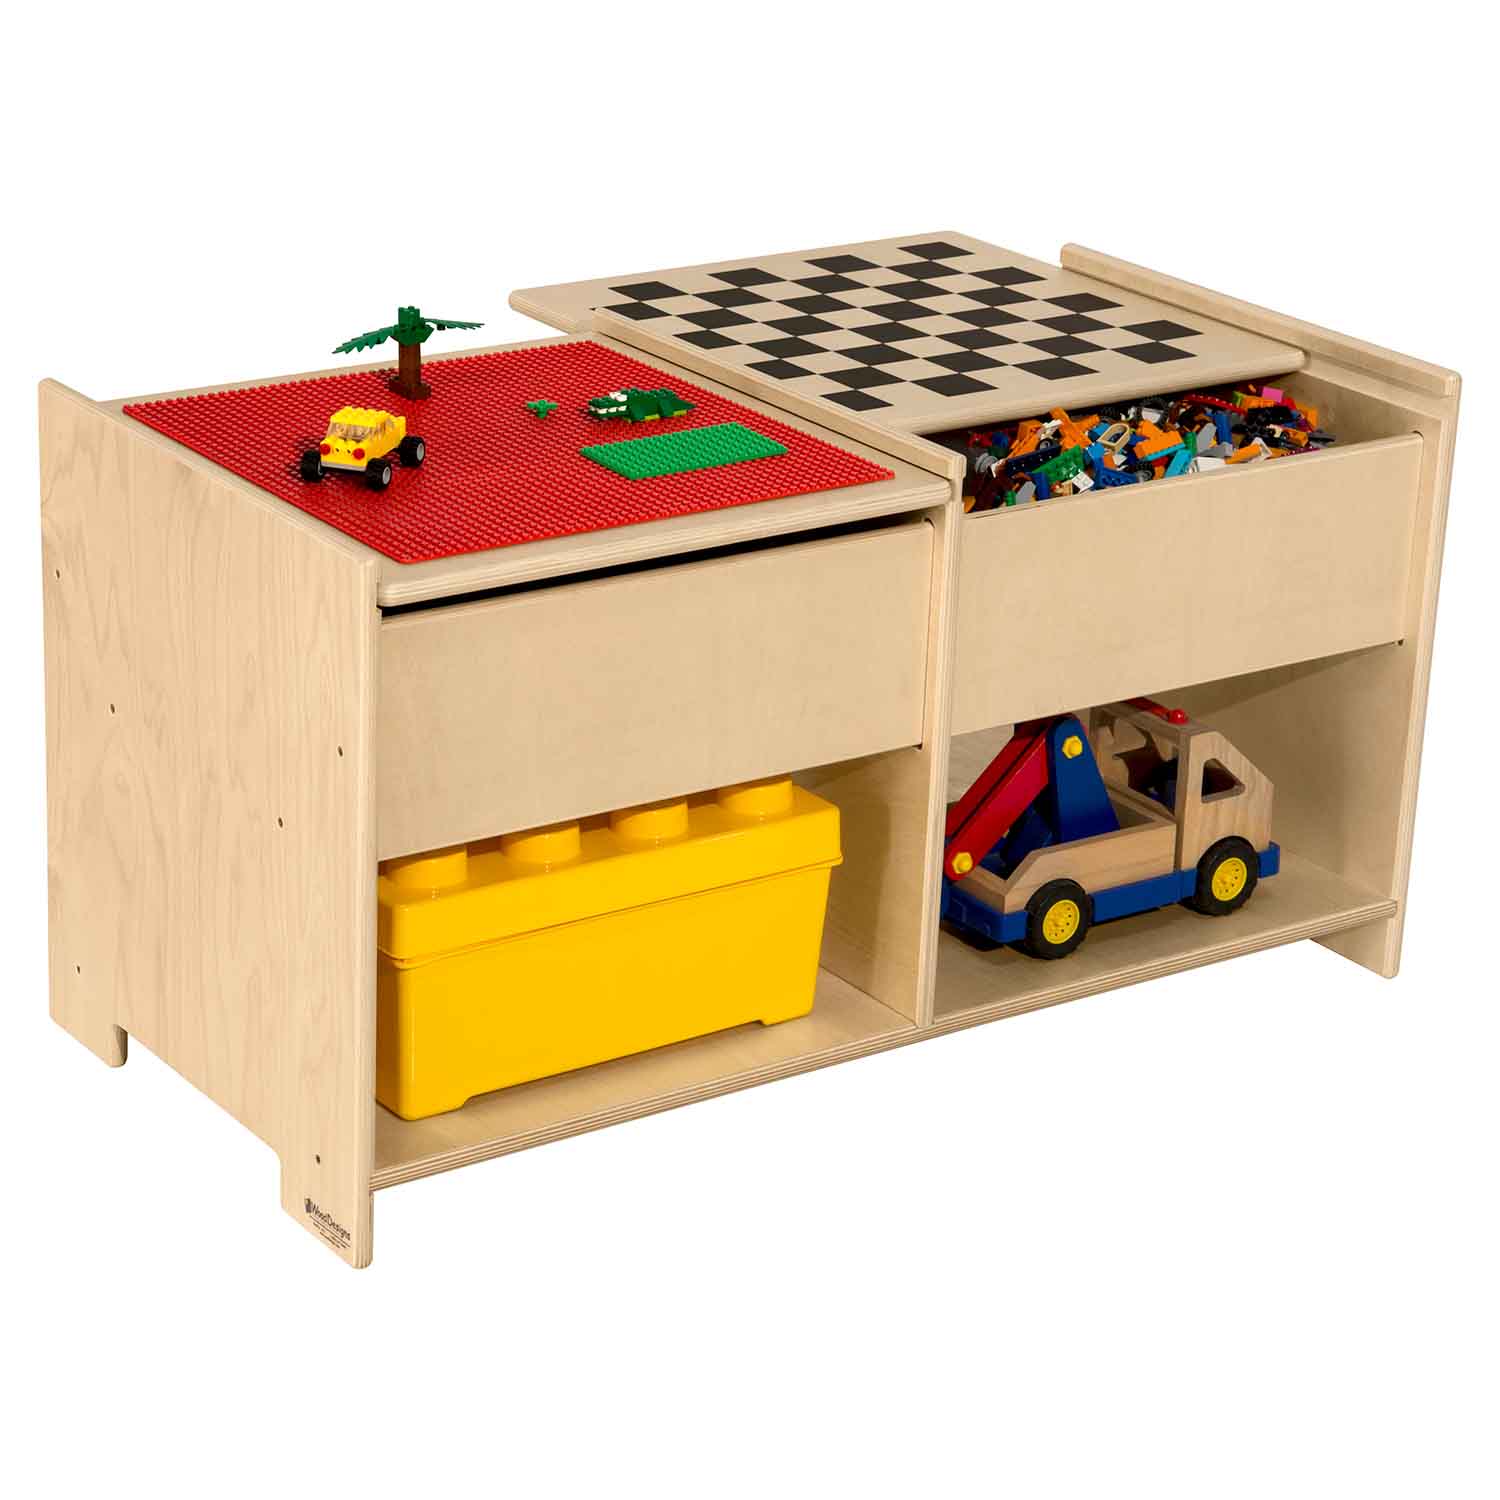 Build-N-Play Table